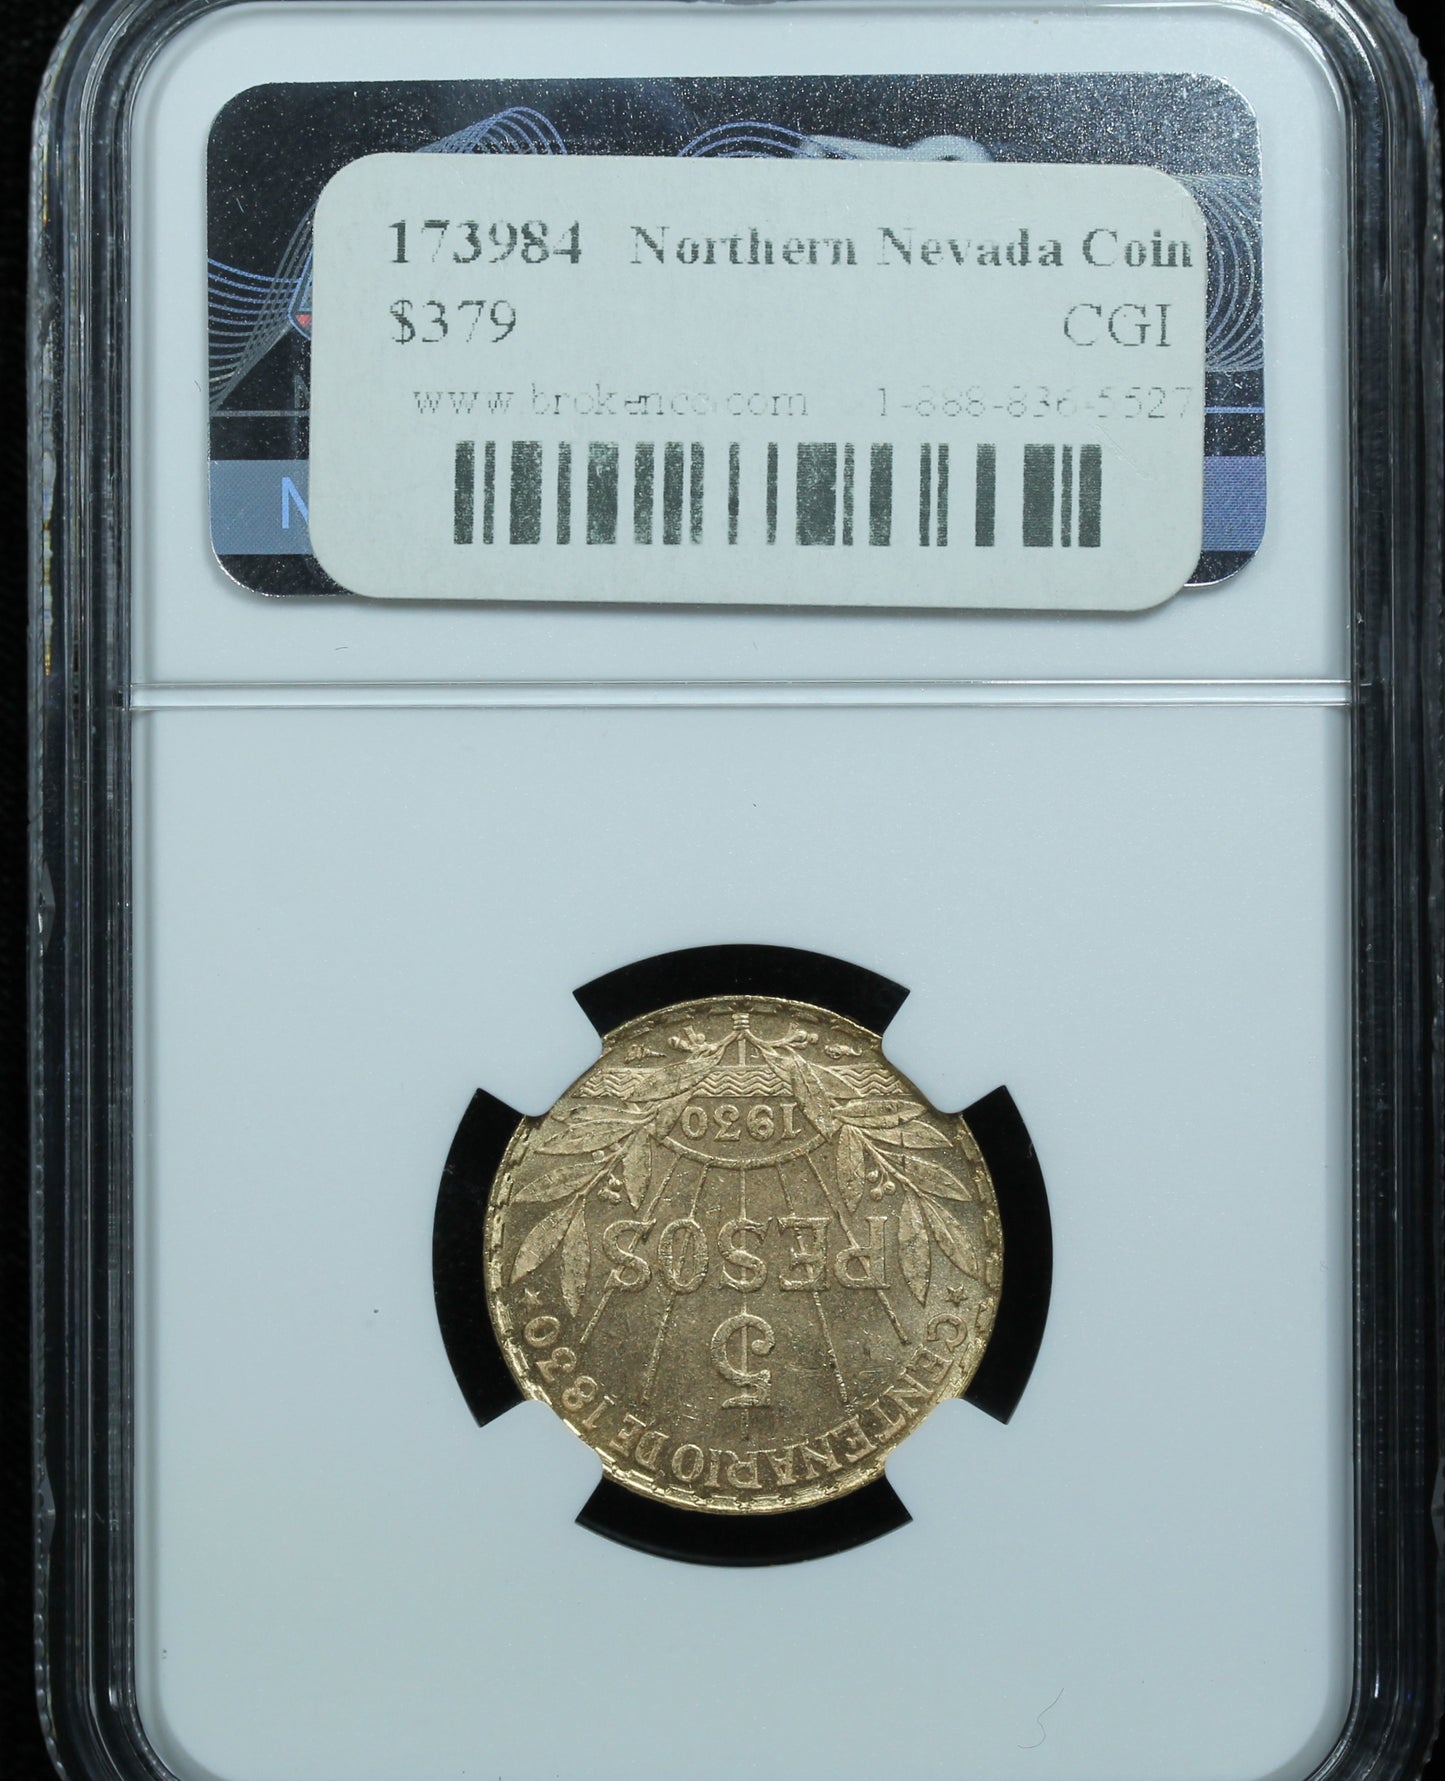 1930 Uruguay 5 Peso Gold Coin - NGC MS 63